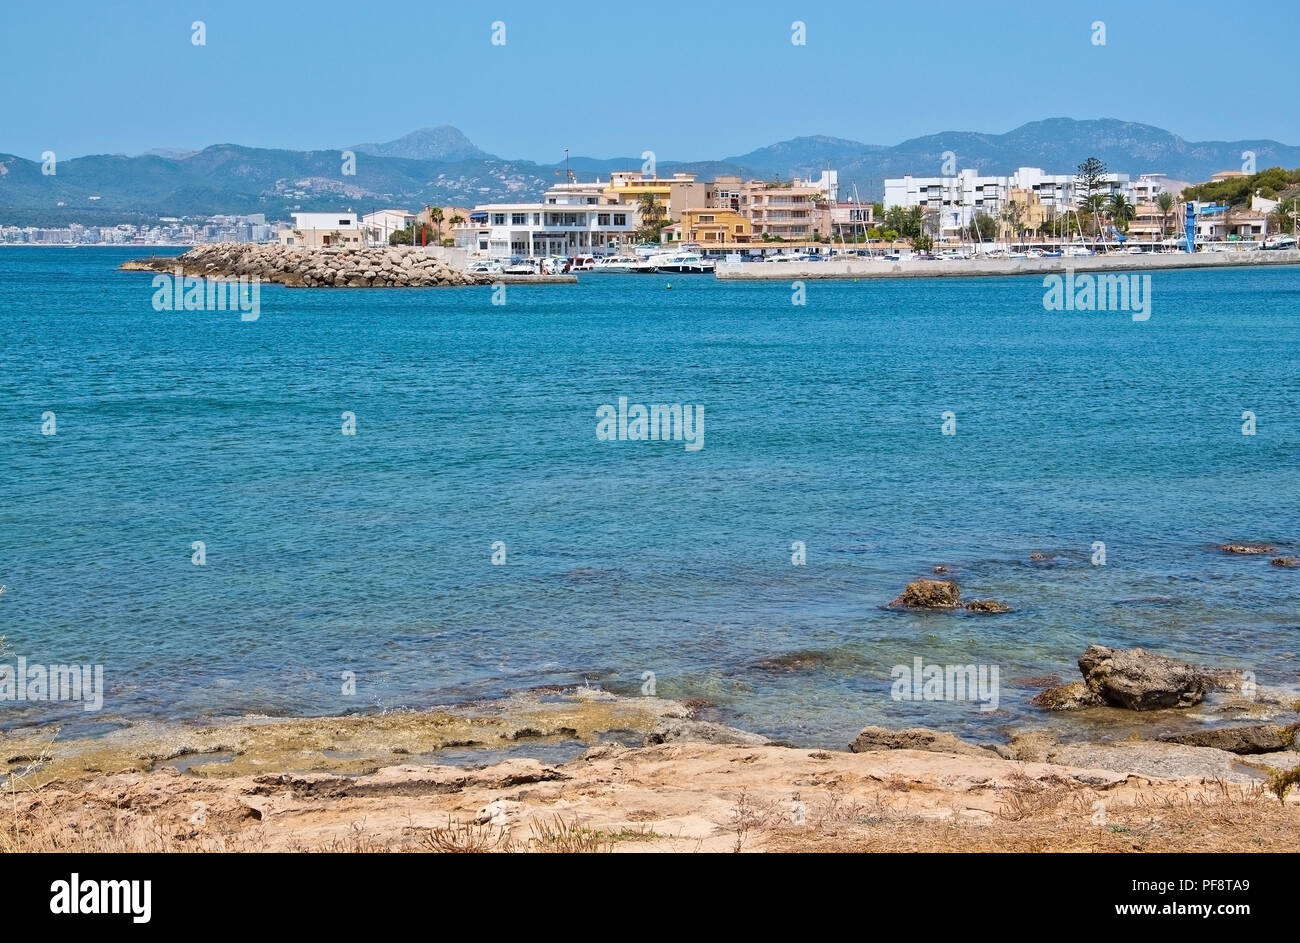 PALMA DE MALLORCA, SPANIEN - 21. JULI 2012: Cala Gamba Marina in felsige Küstenlandschaft am 21. Juli 2012 auf Mallorca, Spanien. Stockfoto